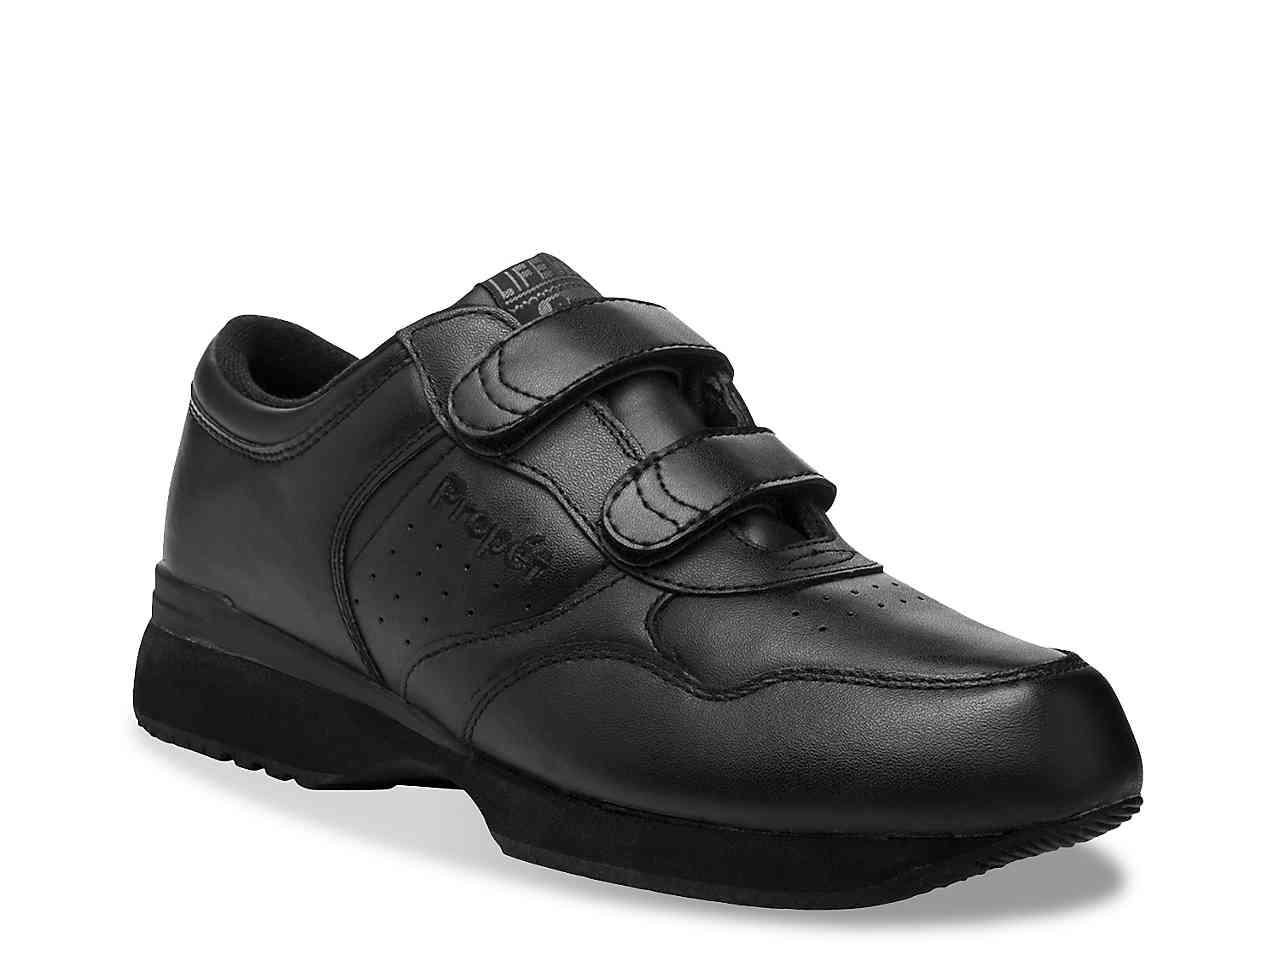 Propet Leather Life Walker Slip-on Walking Shoe in Black for Men - Lyst